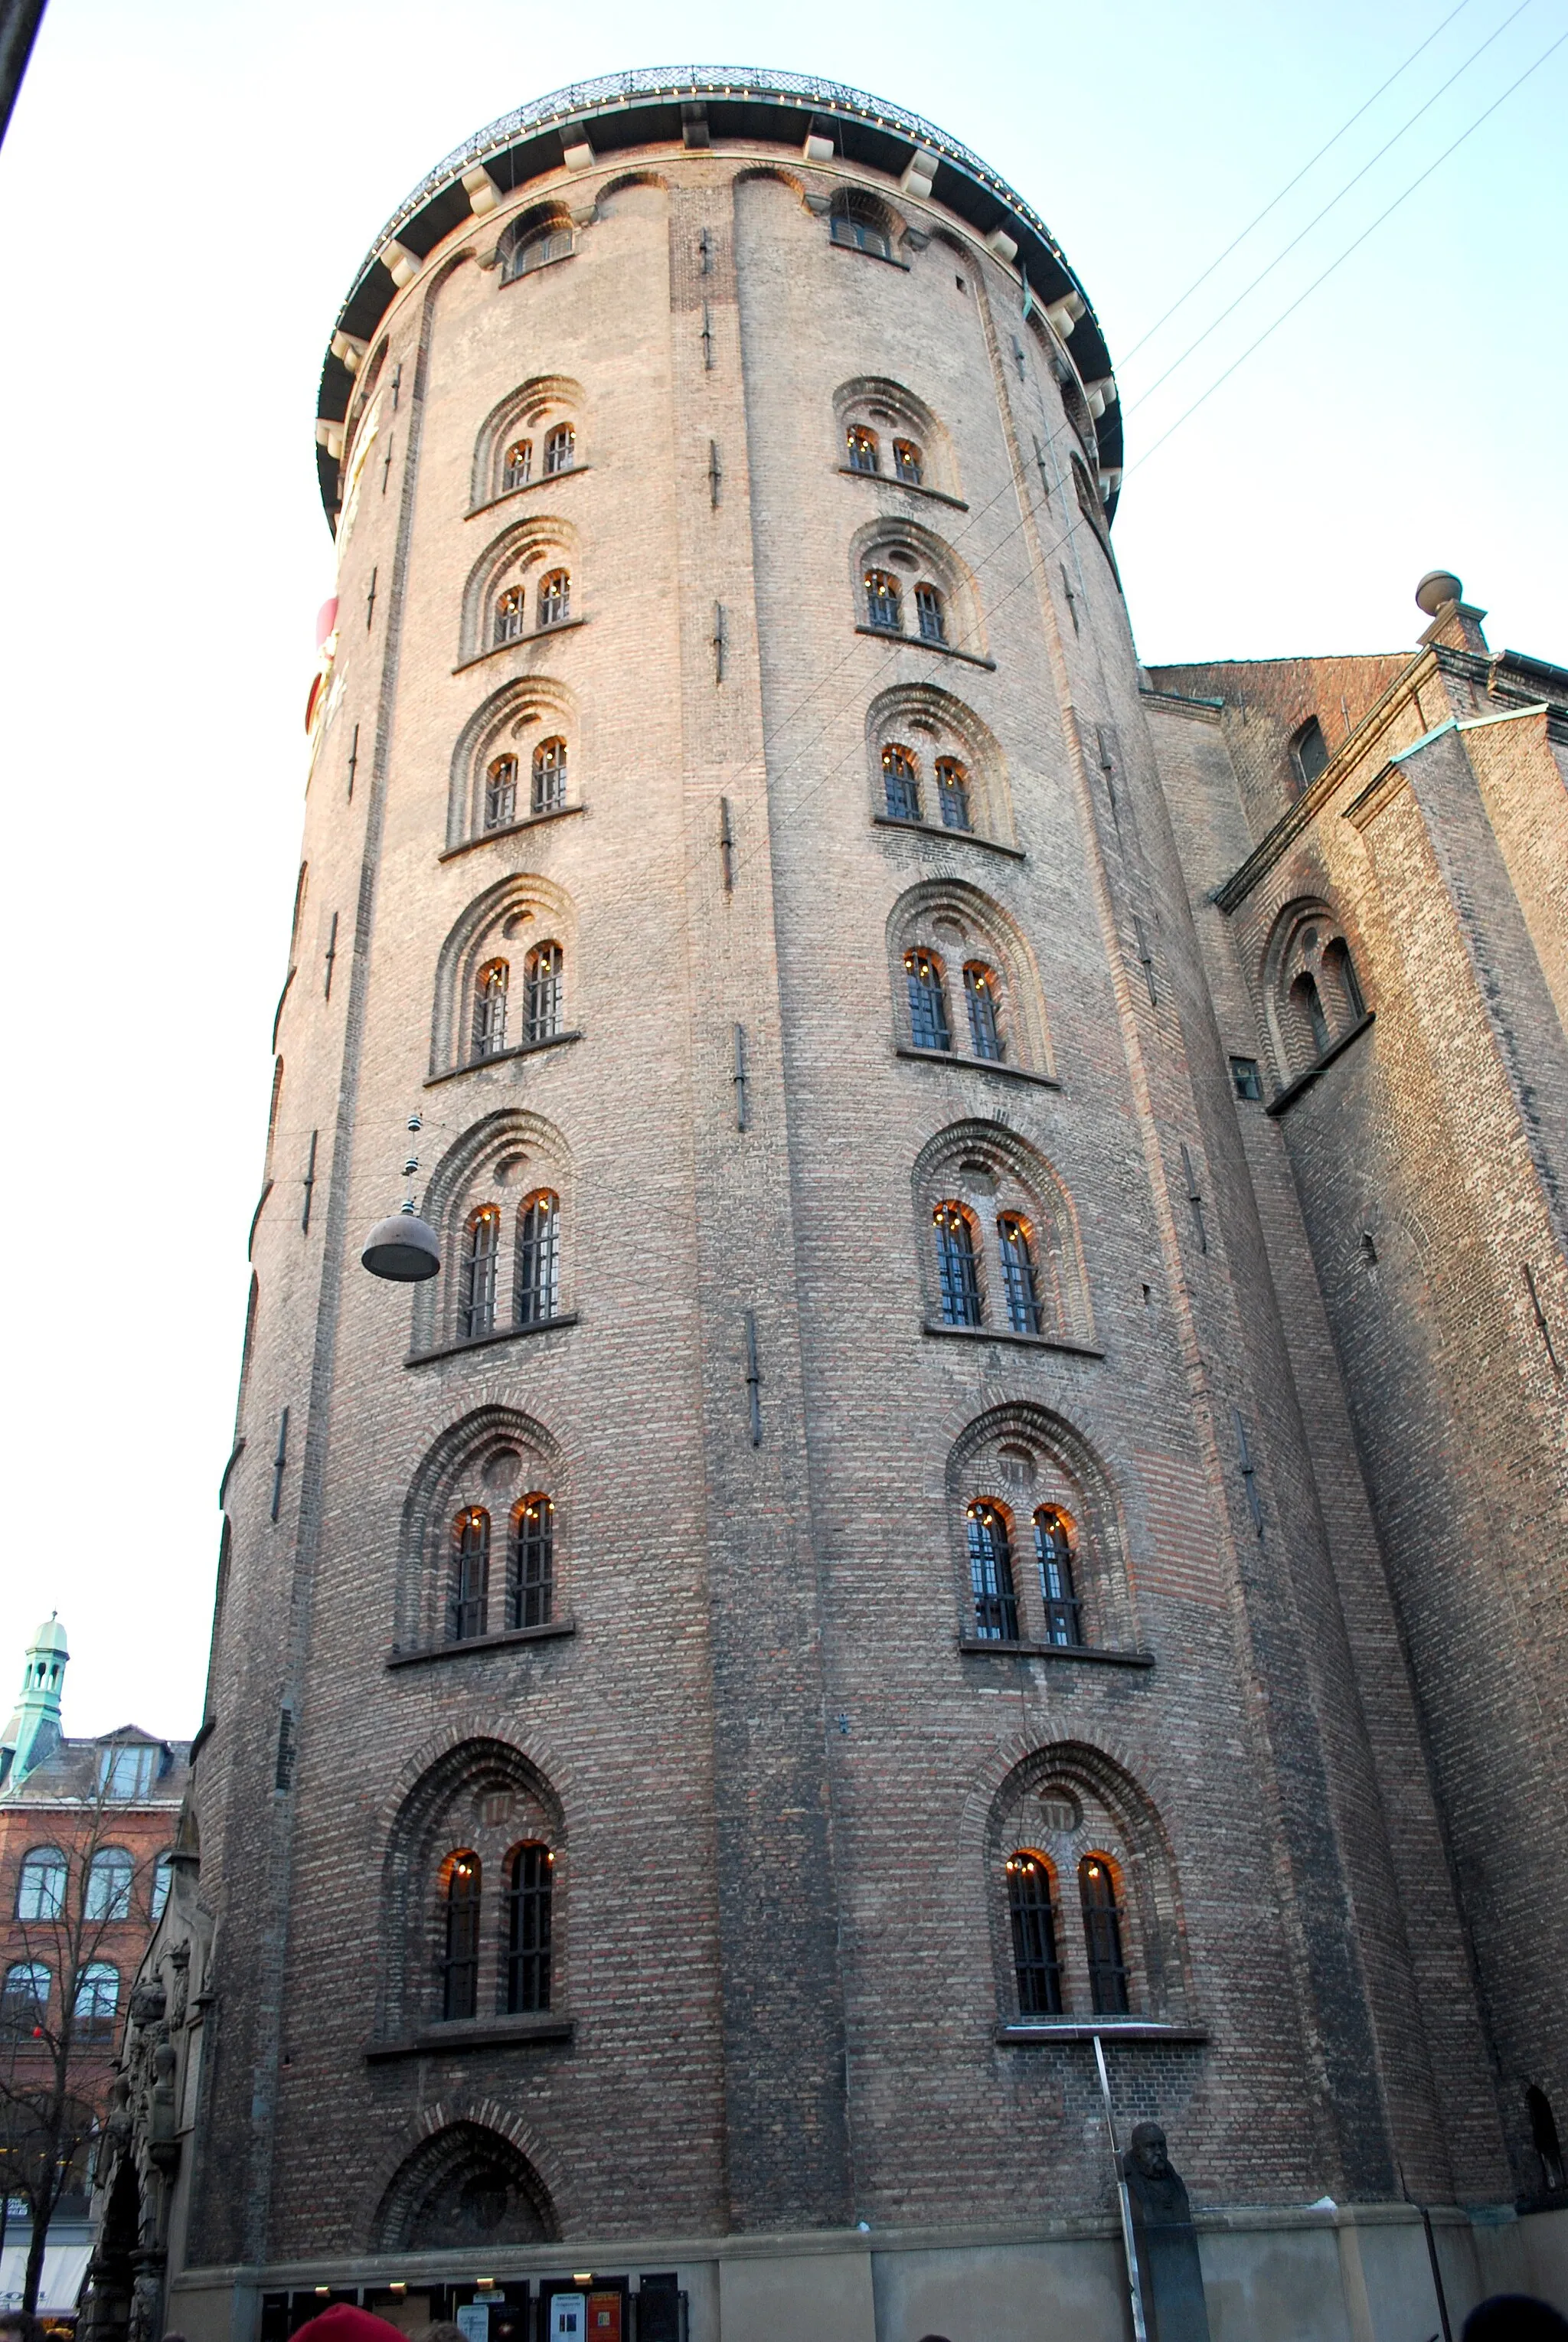 Photo showing: Rundetårn (English: Round Tower) is a 17th-century tower located in Købmagergade, Copenhagen, Denmark